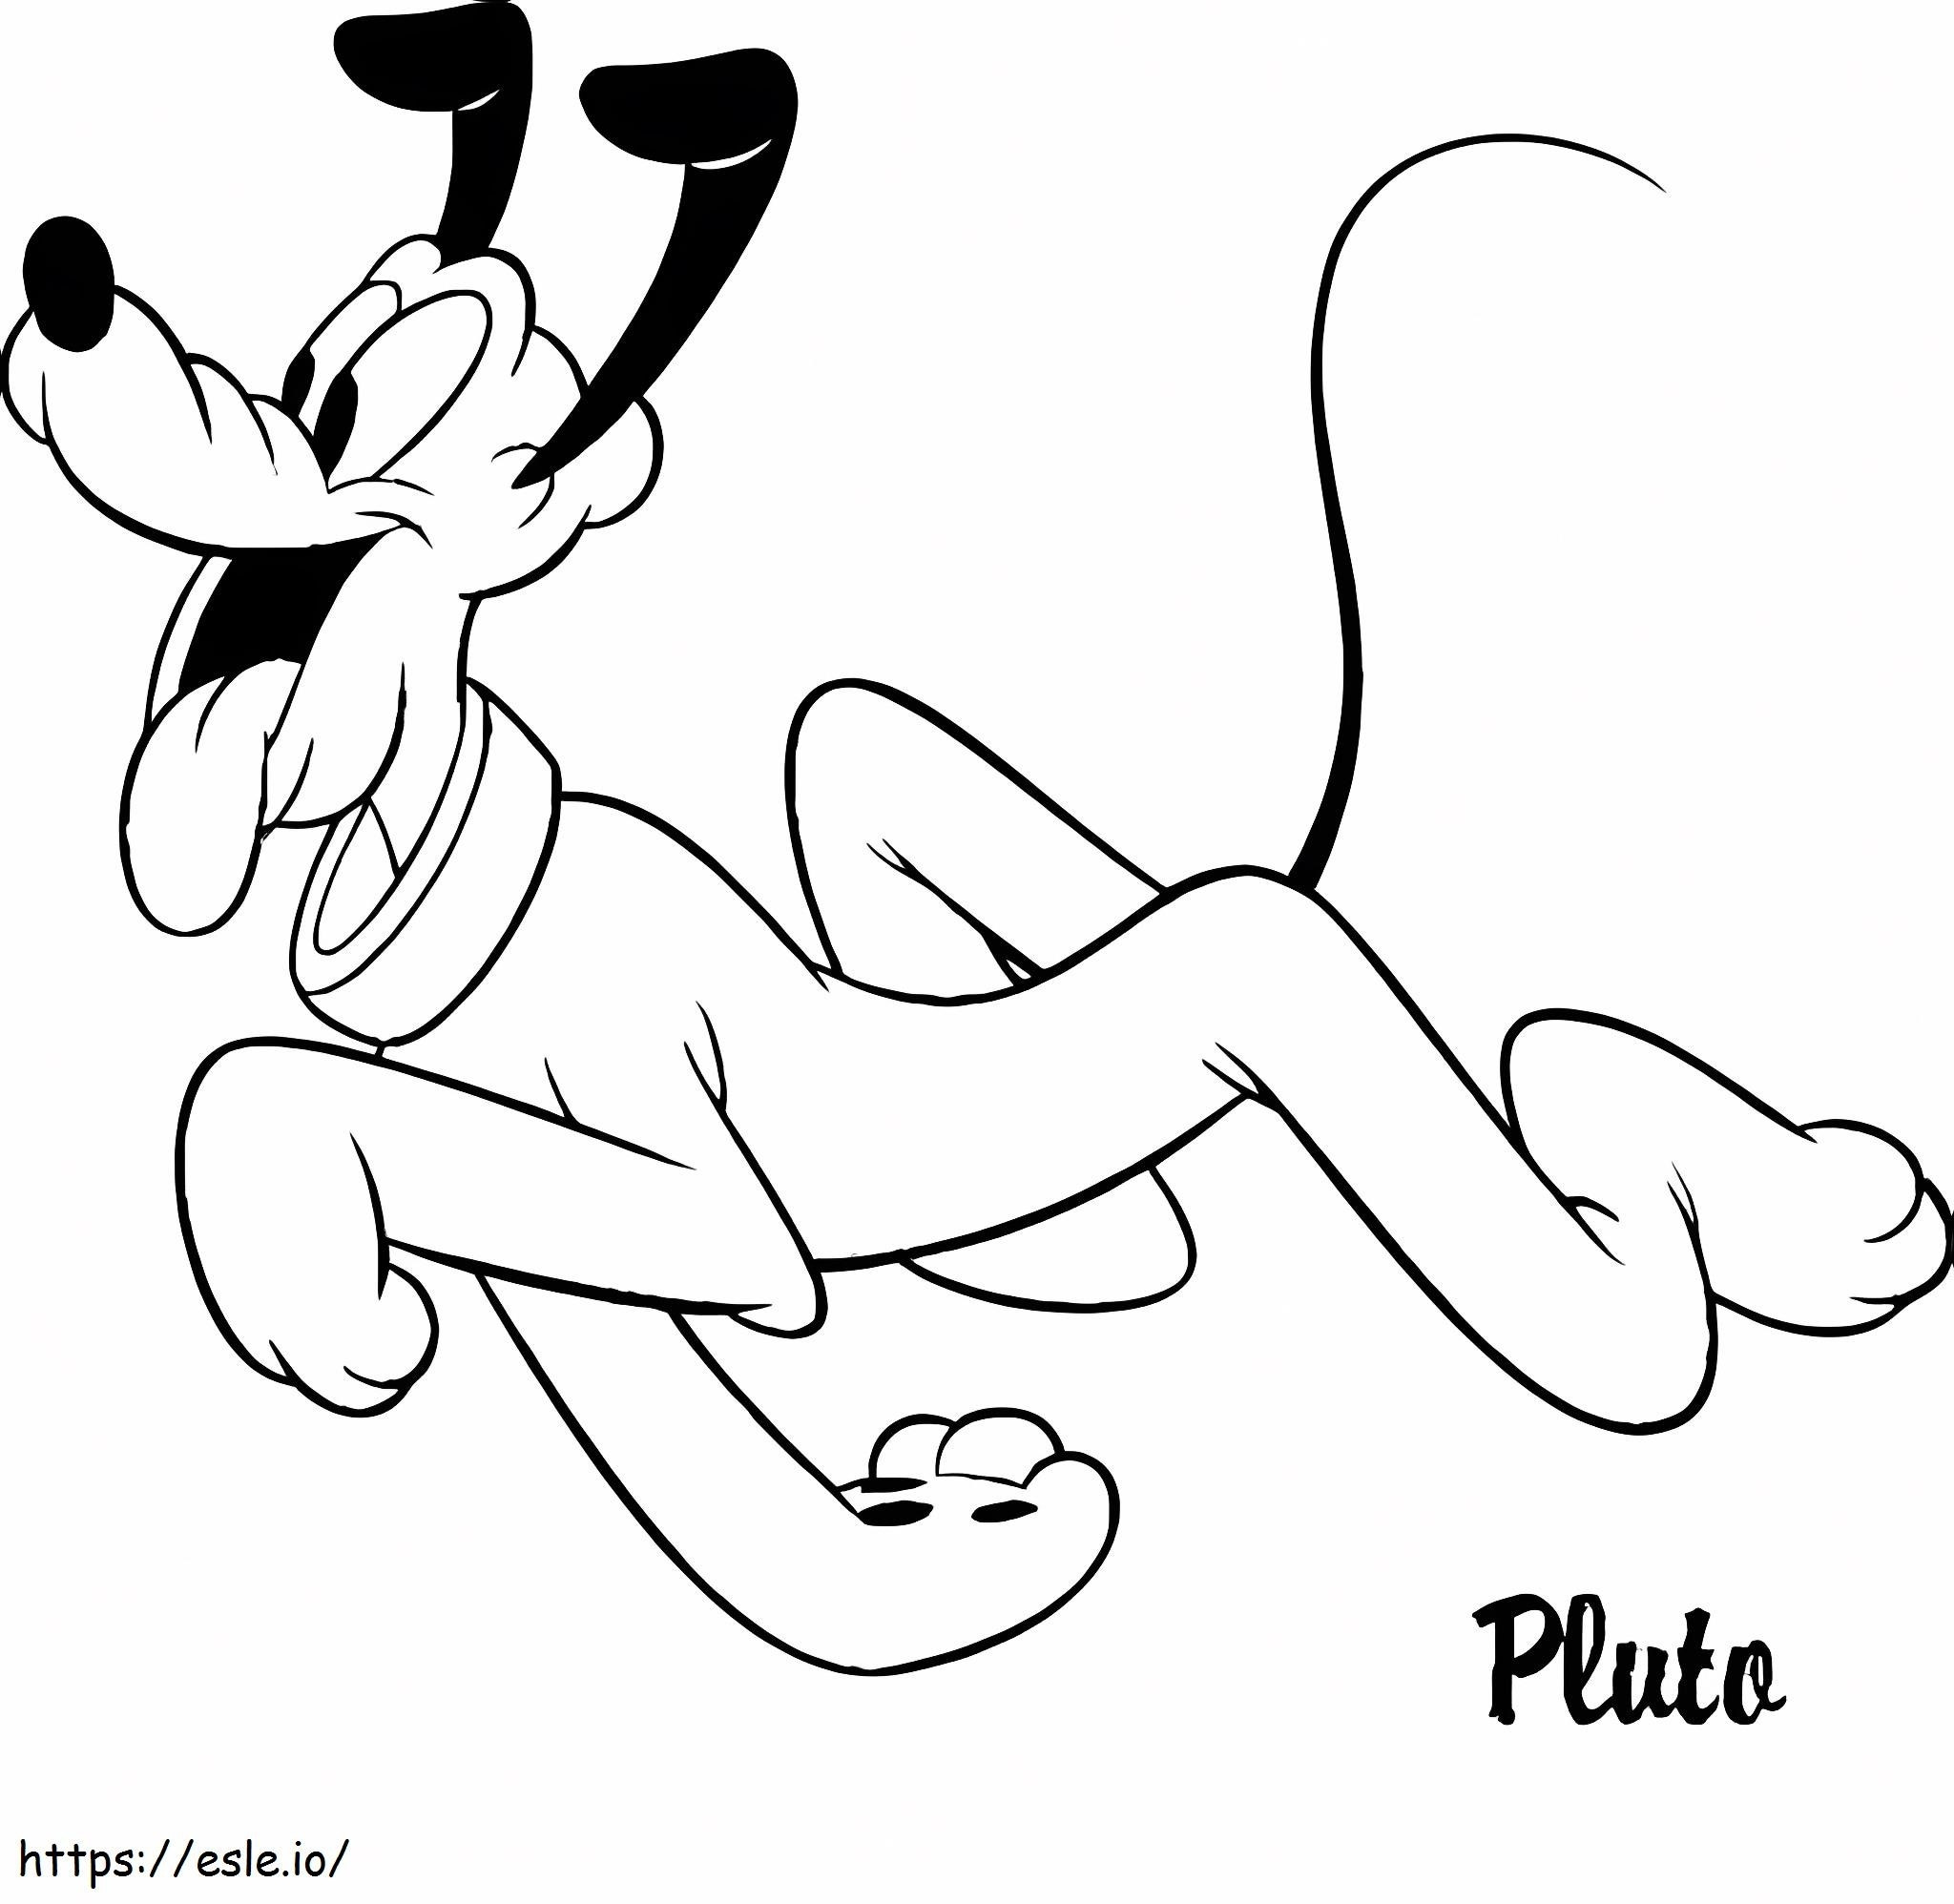 Bieg Plutona kolorowanka